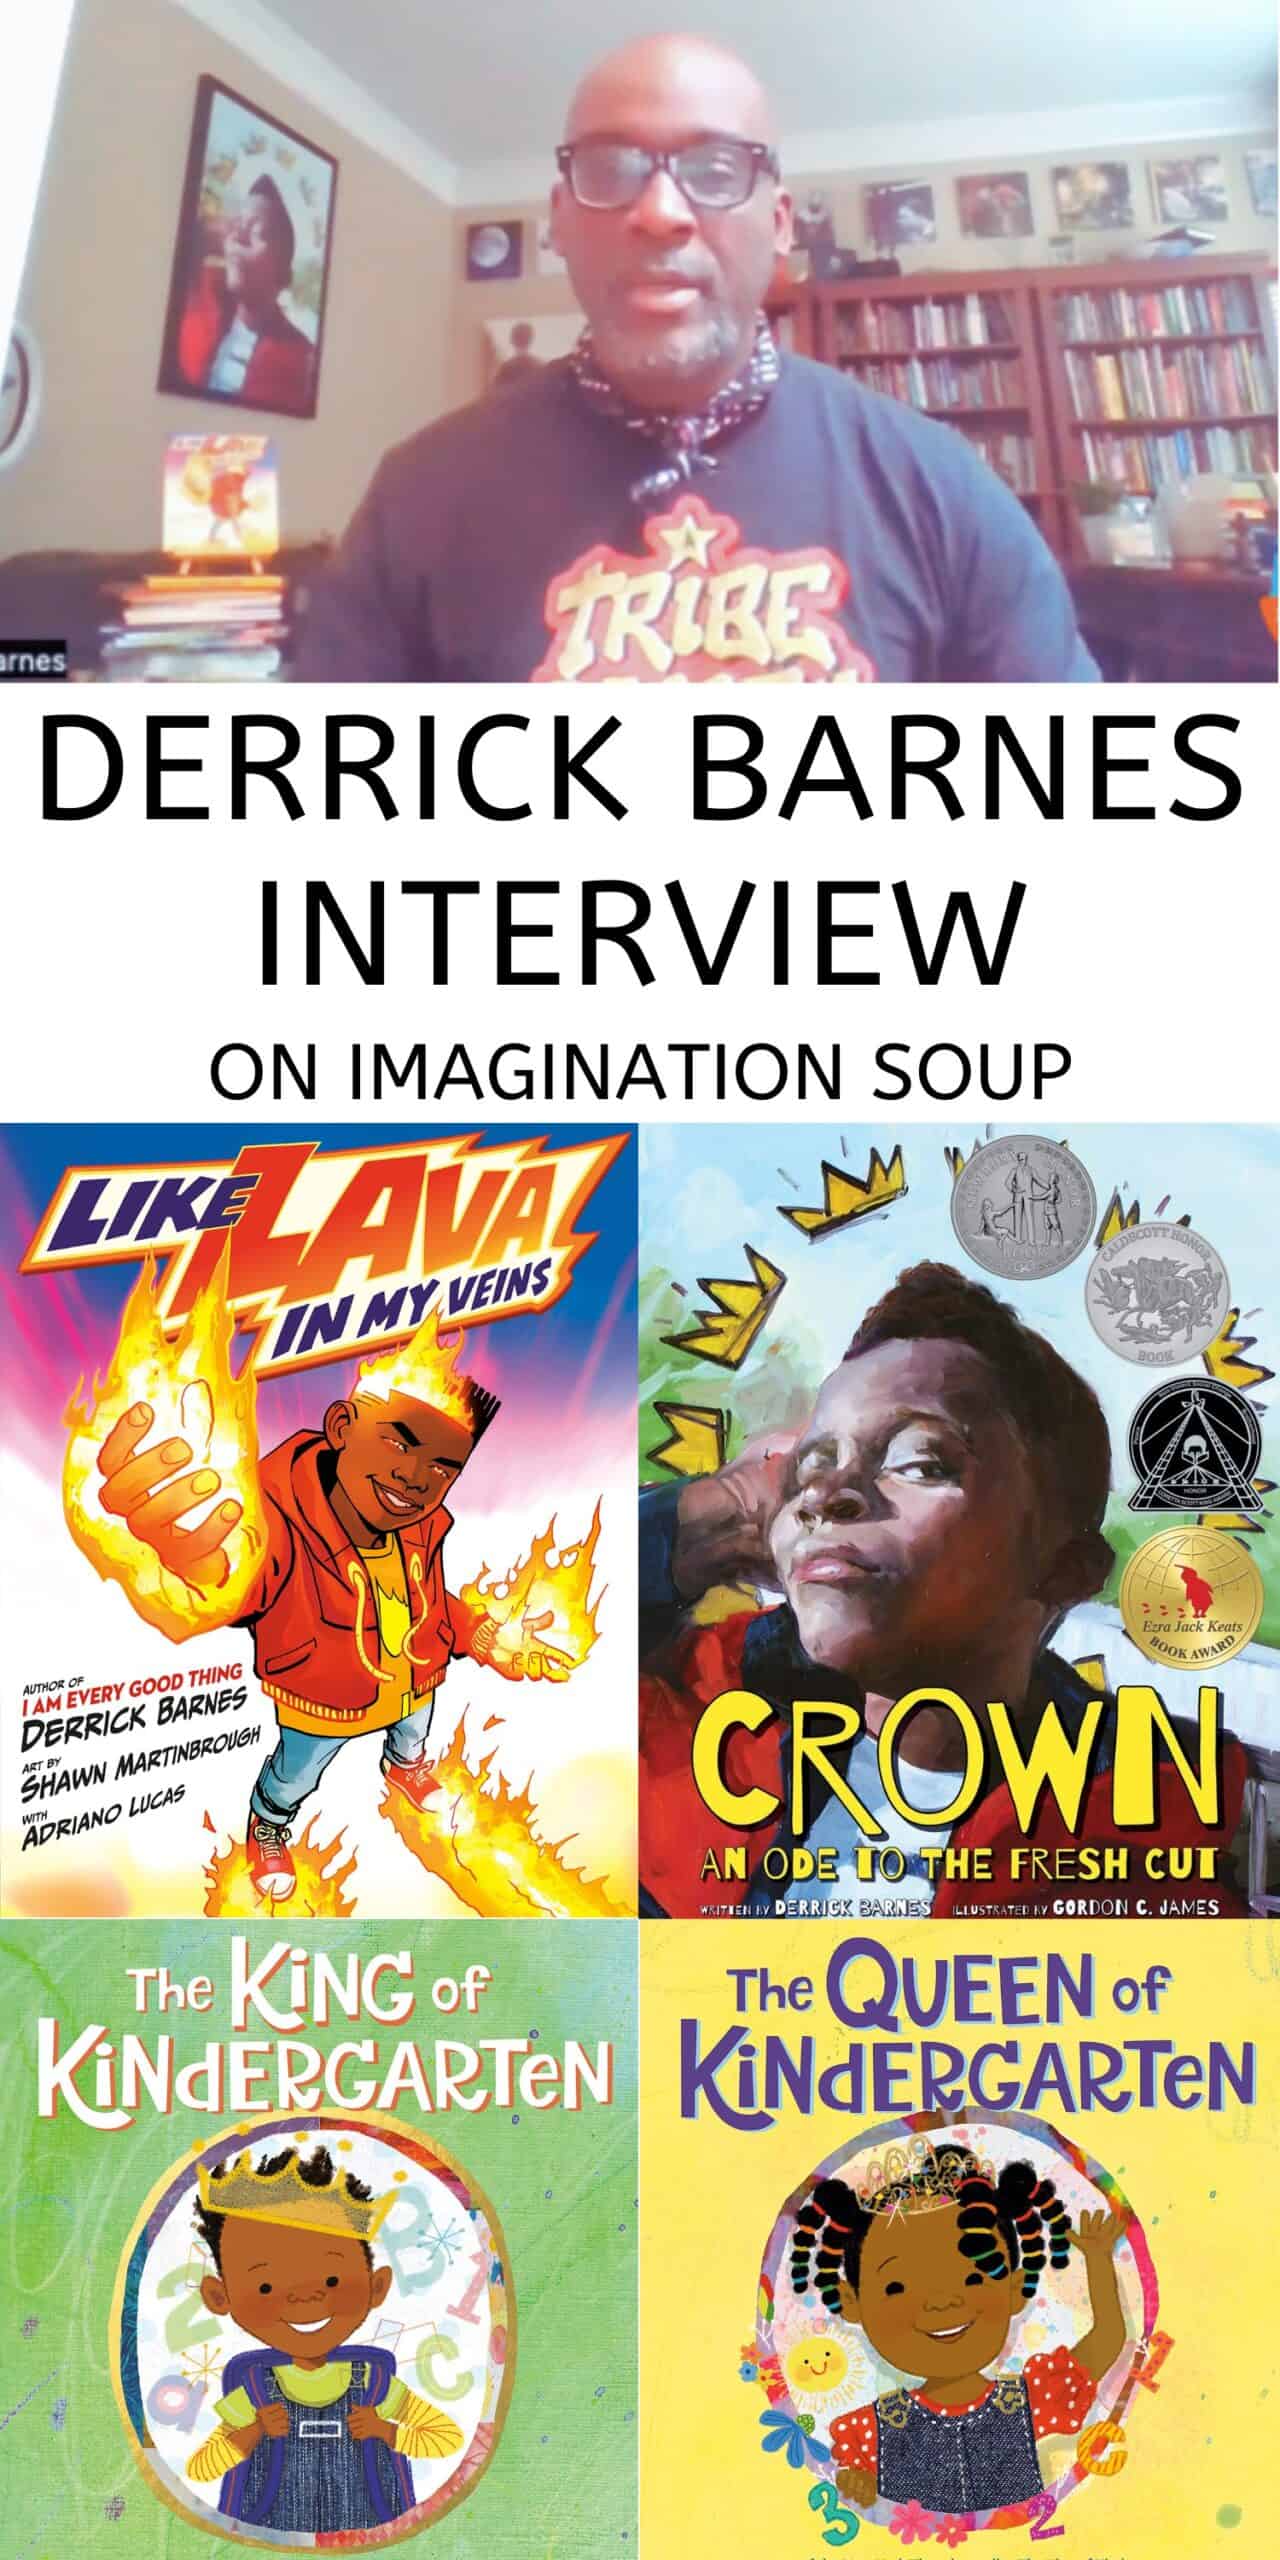 Books, Gratitude, and Activism: Author Interview with Derrick Barnes